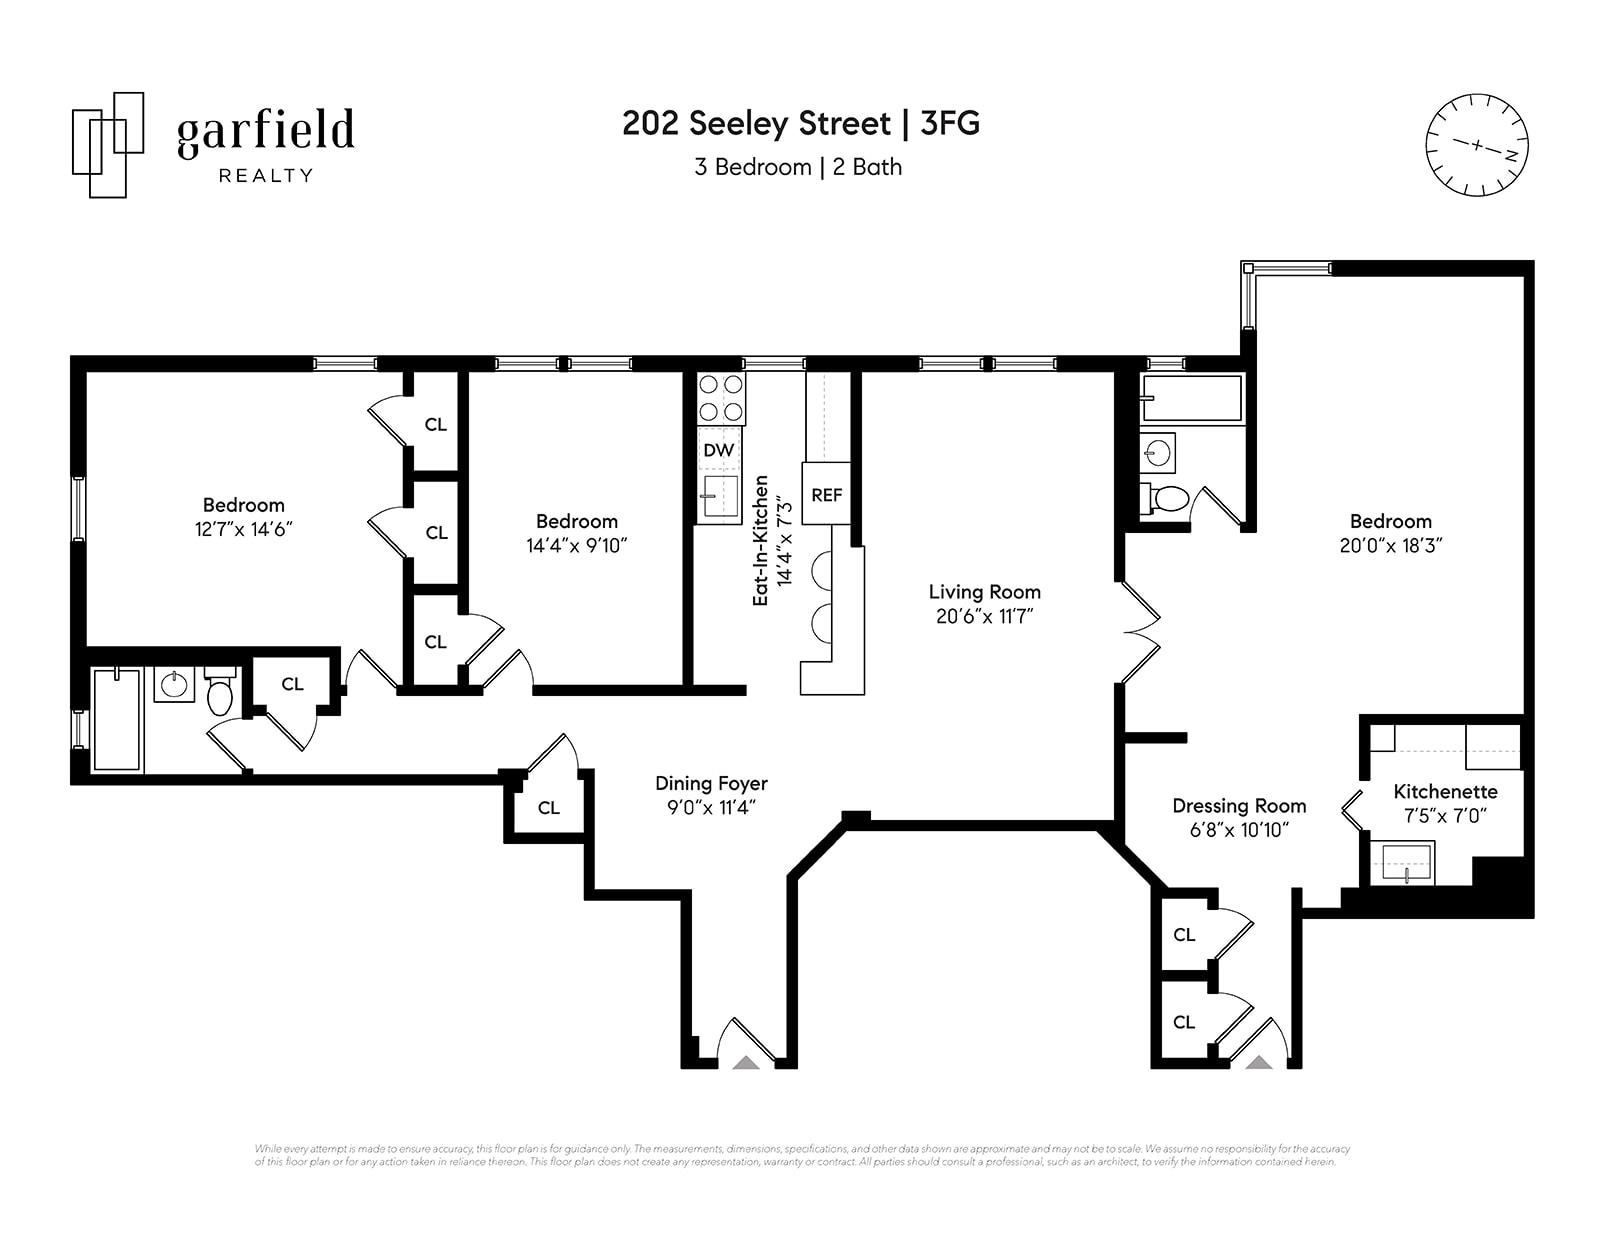 Floorplan of 202 Seeley St